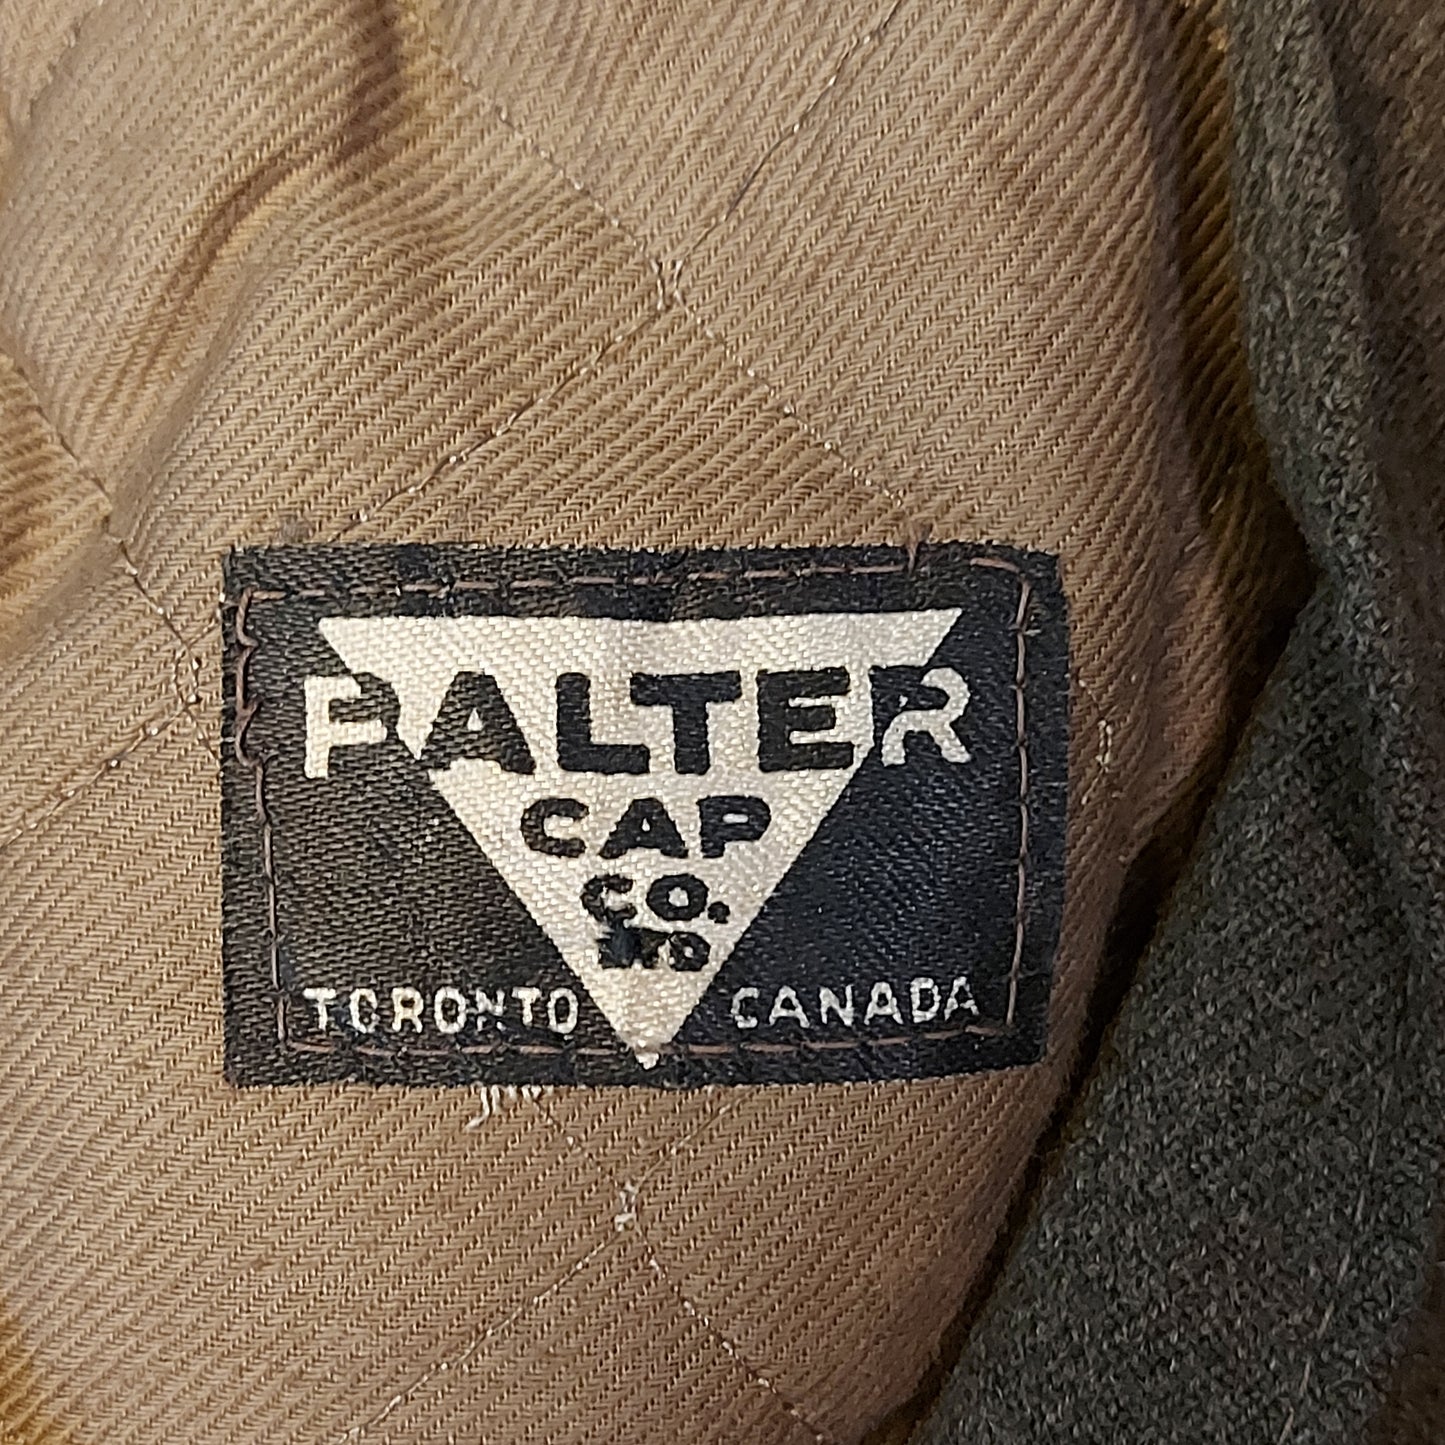 WW2 Canadian Scottish Tam O Shanter With Badge